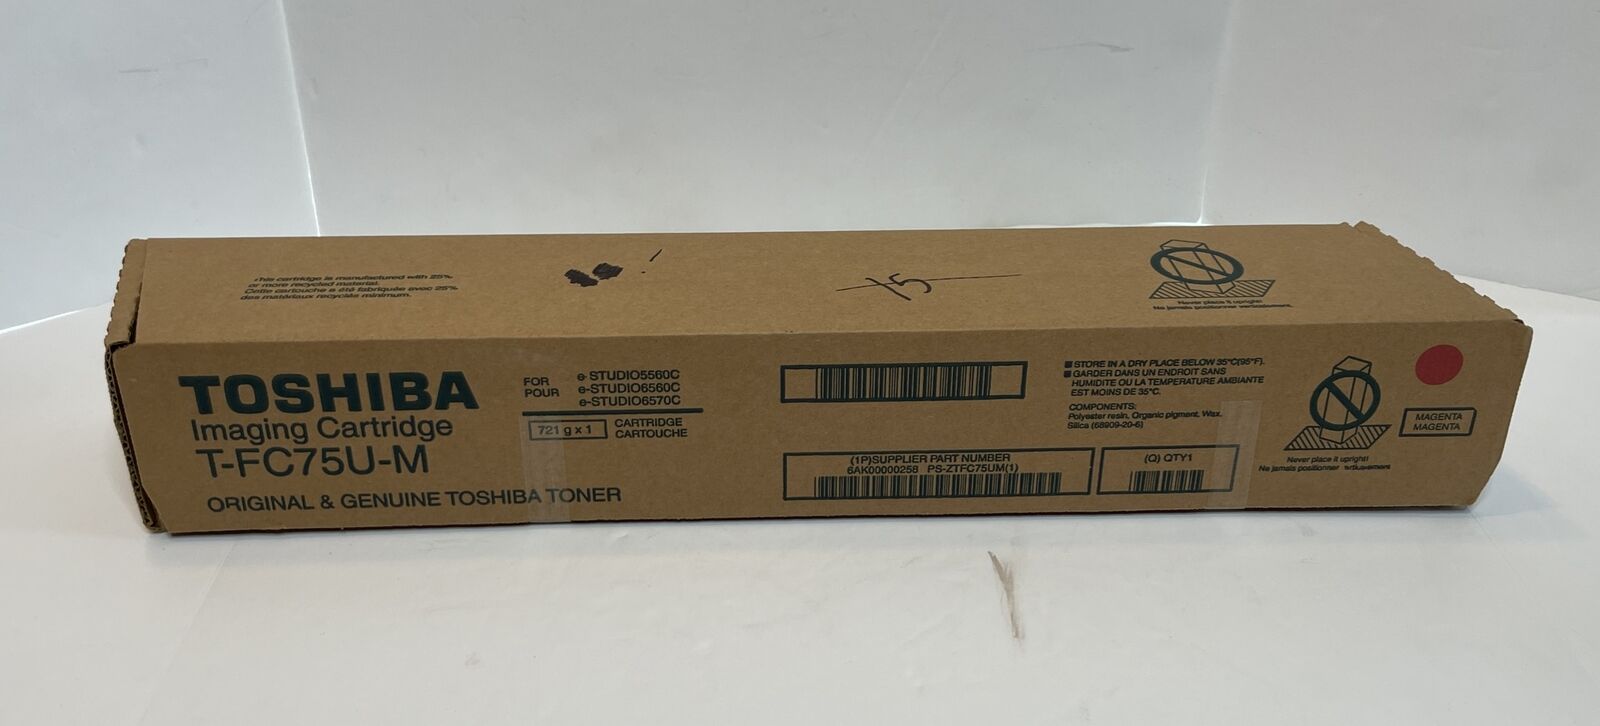 Brand New Genuine Toshiba T-FC75U-M Magenta Toner Cartridge